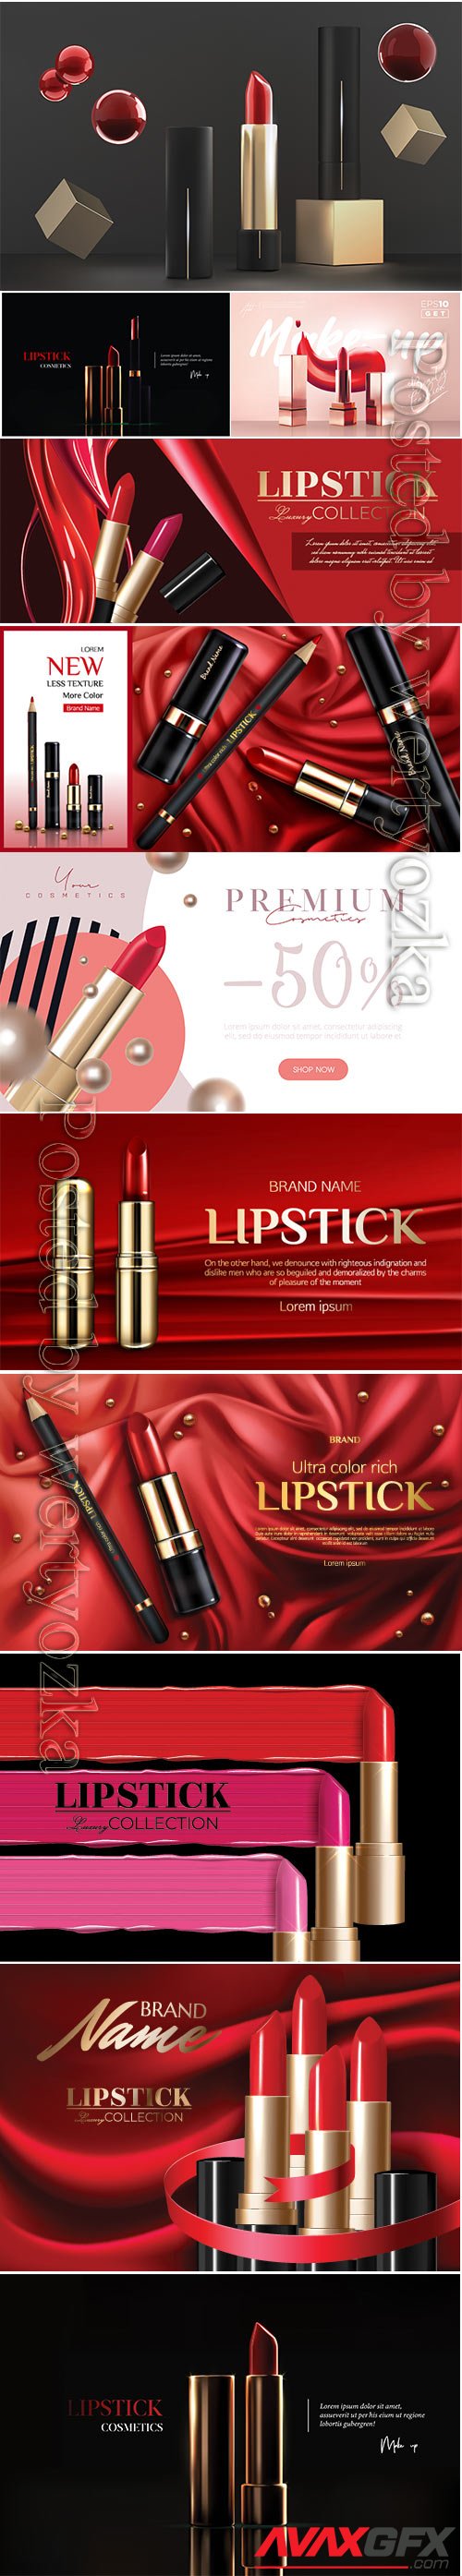 Fashion lipstick make-up banner vector illustration